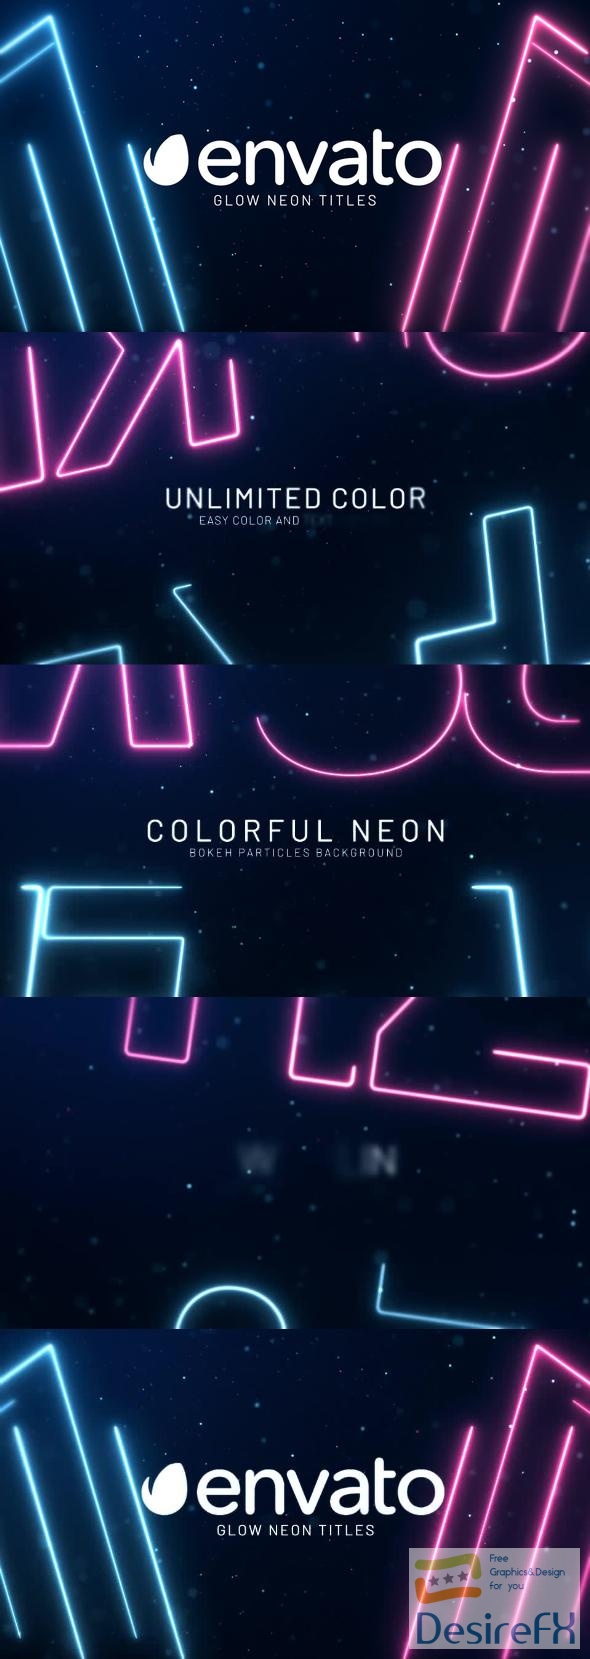 VideoHive Neon Titles Opener 44677125